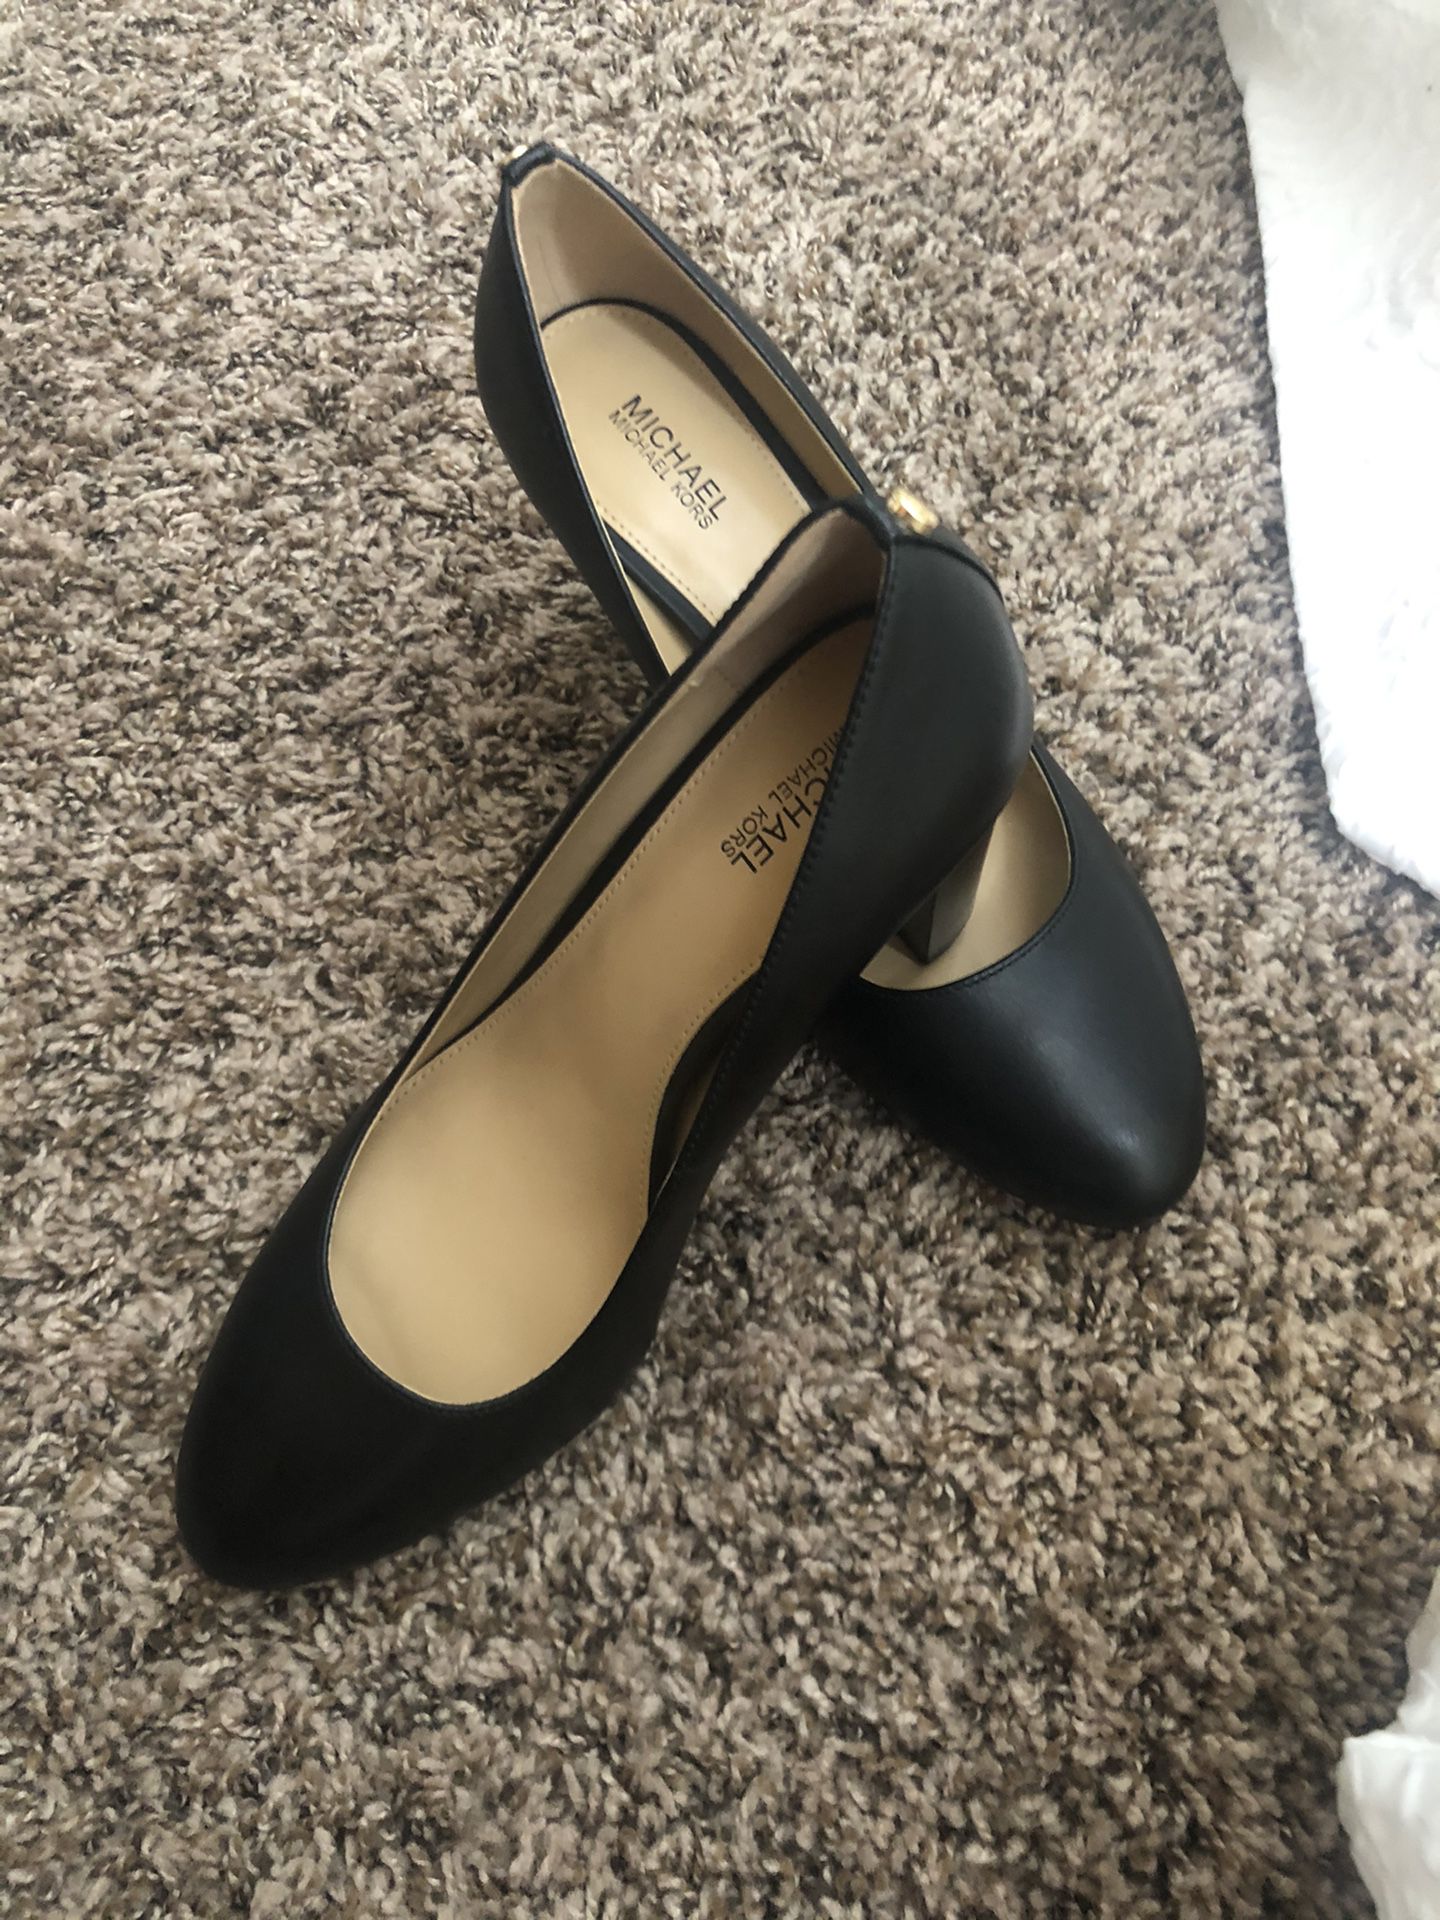 New Michael Kors black heels